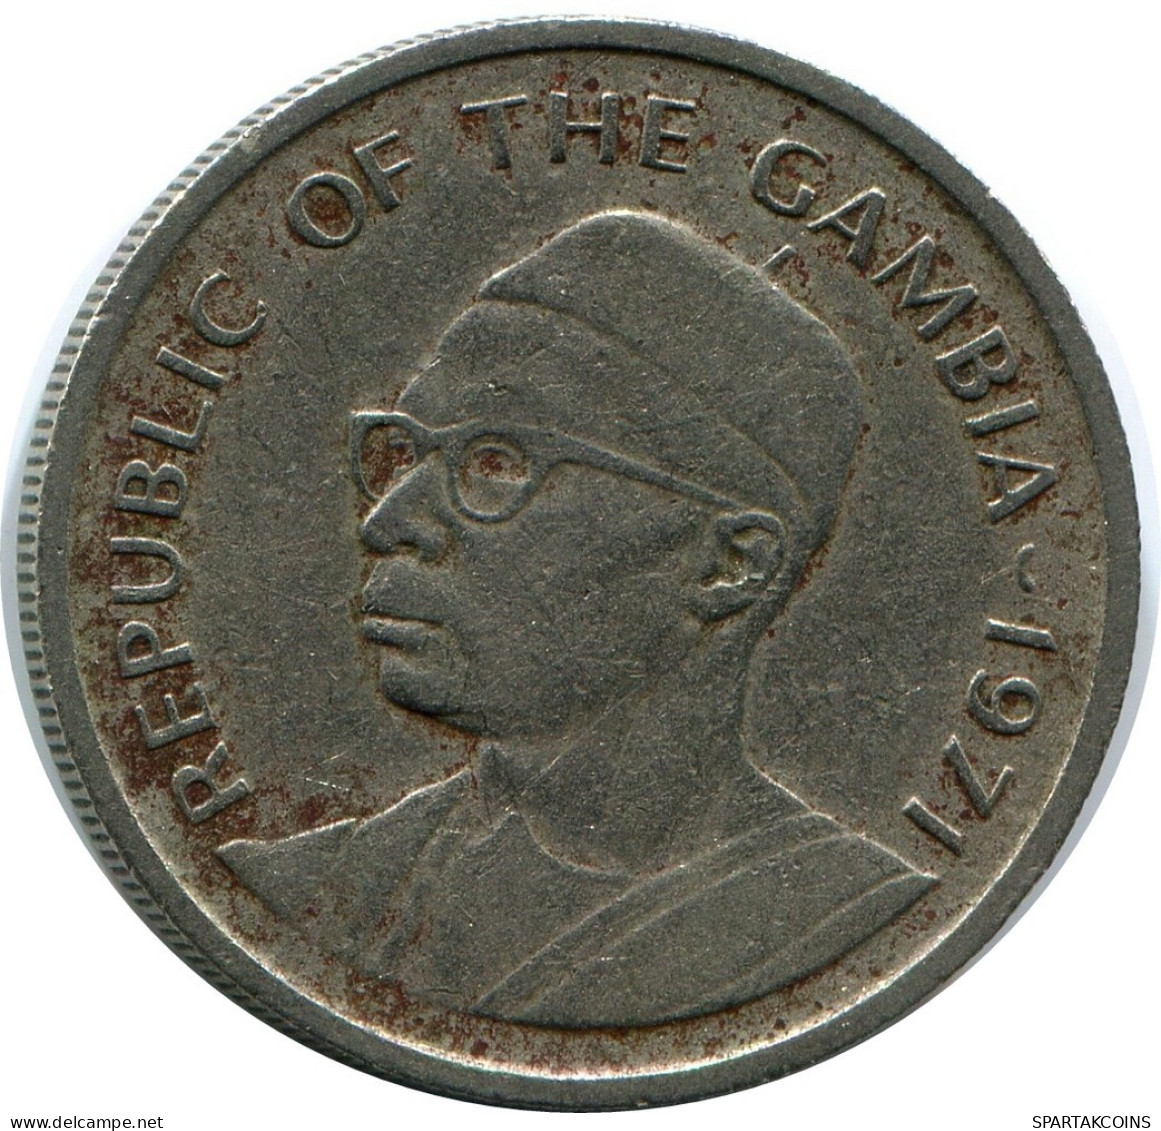 25 BUTUTS 1971 GAMBIA Coin #AP889.U.A - Gambie